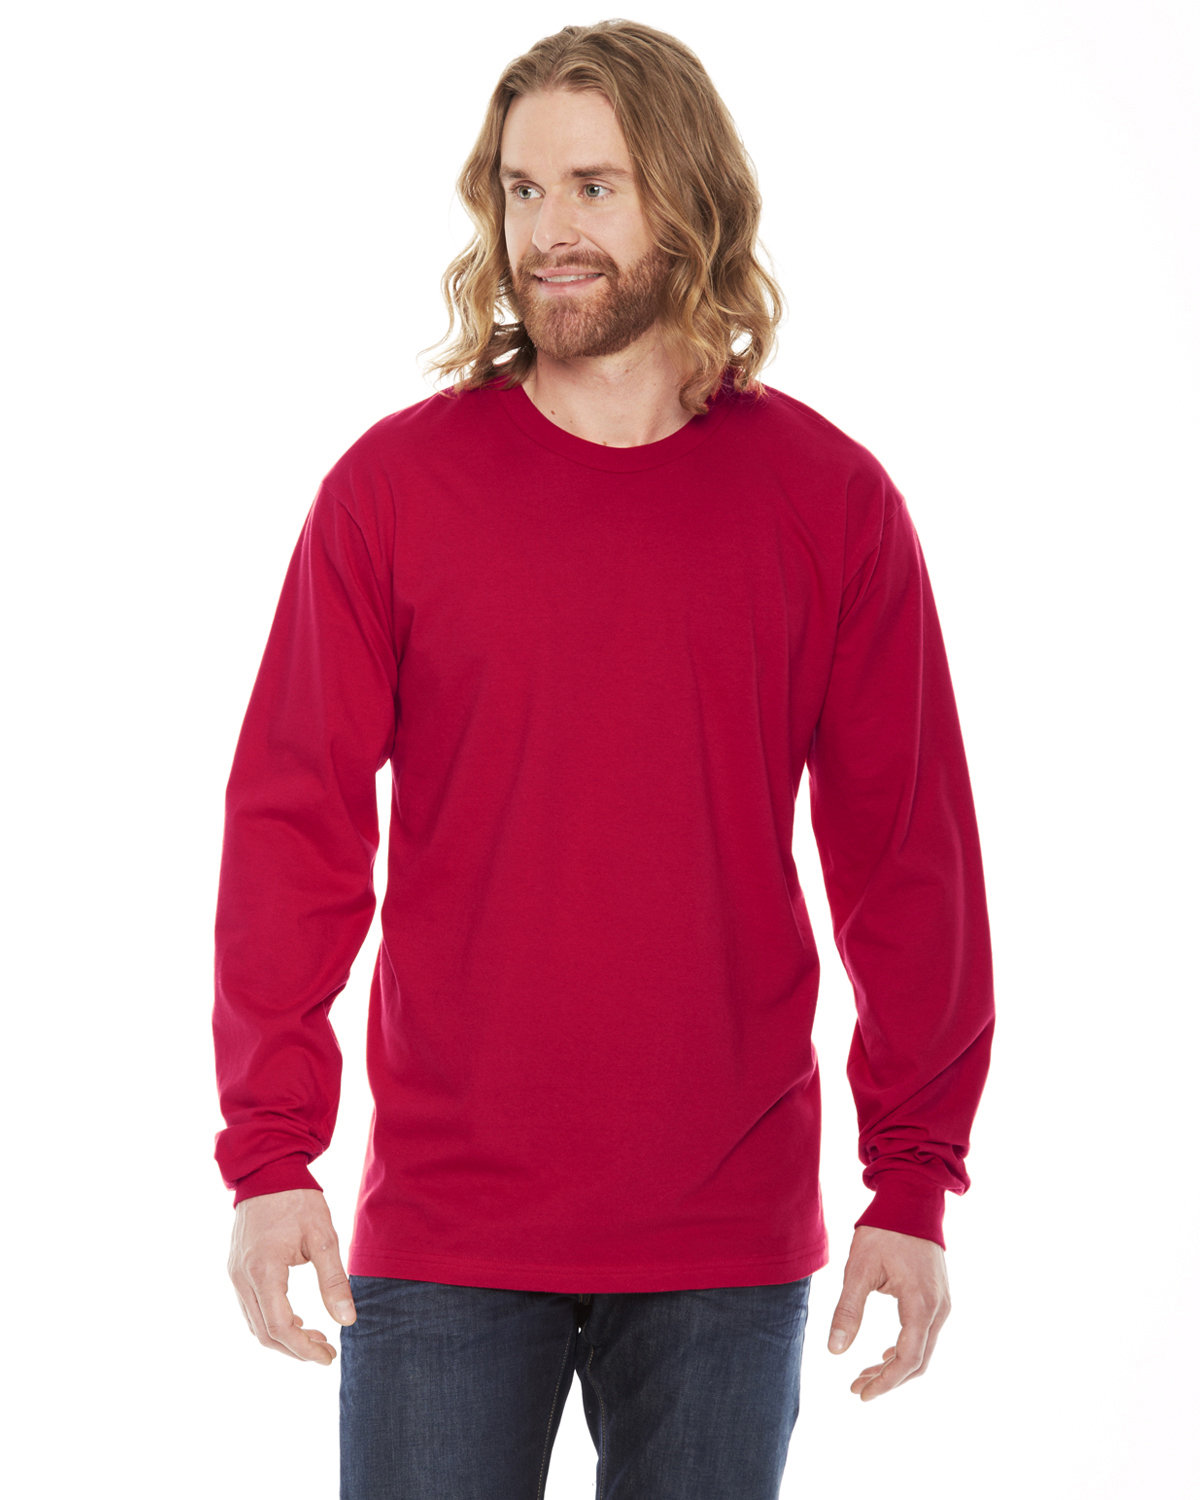 American Apparel Unisex Fine Jersey Long-Sleeve T-Shirt RED 